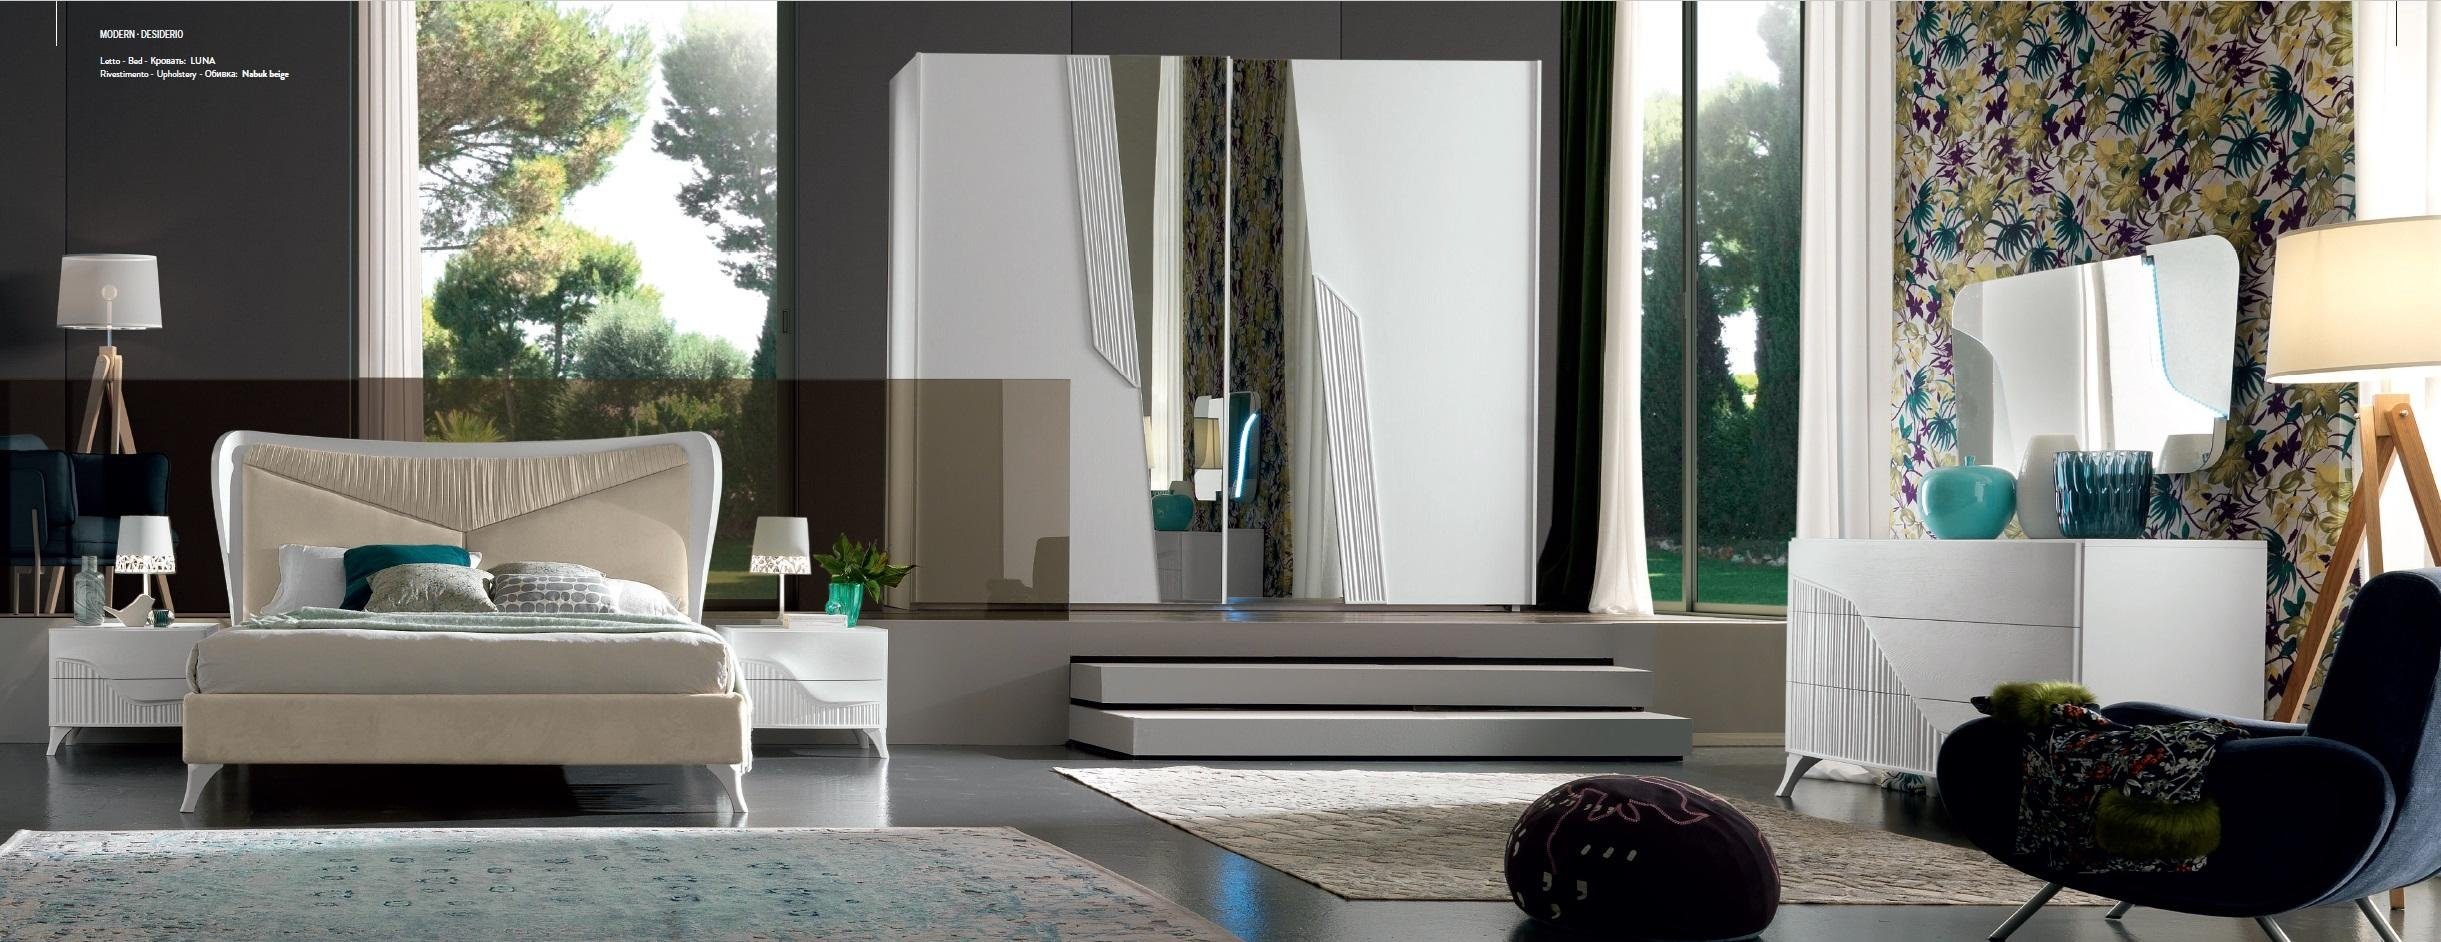 JVmoebel Spiegel Spiegel Wandspiegel Italien Design Moderner Beleuchtet Luxus Möbel